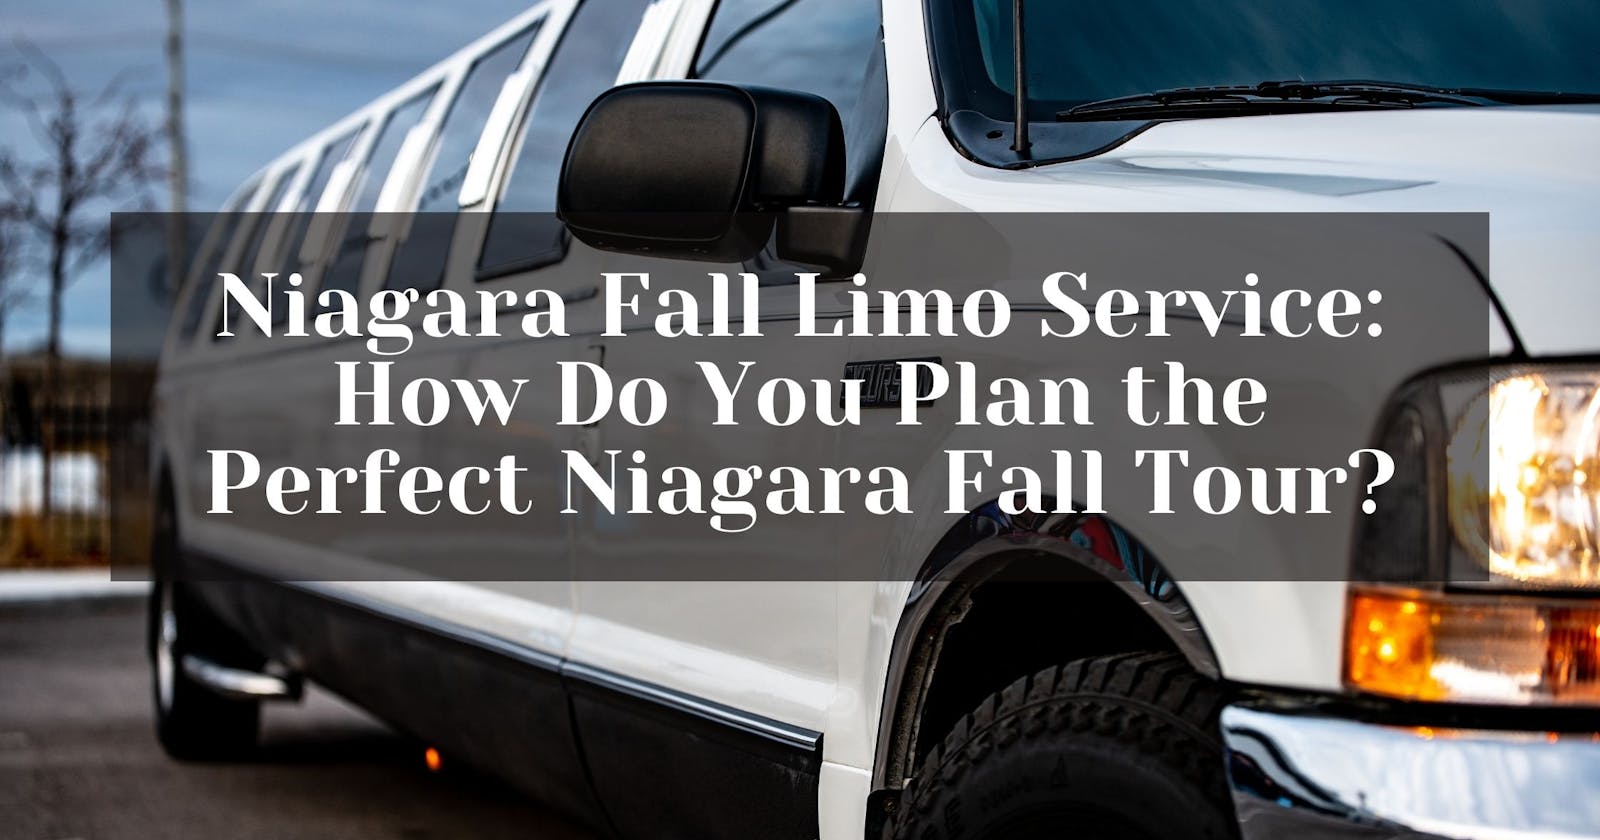 Niagara Fall Limo Service: How Do You Plan the Perfect Niagara Fall Tour?